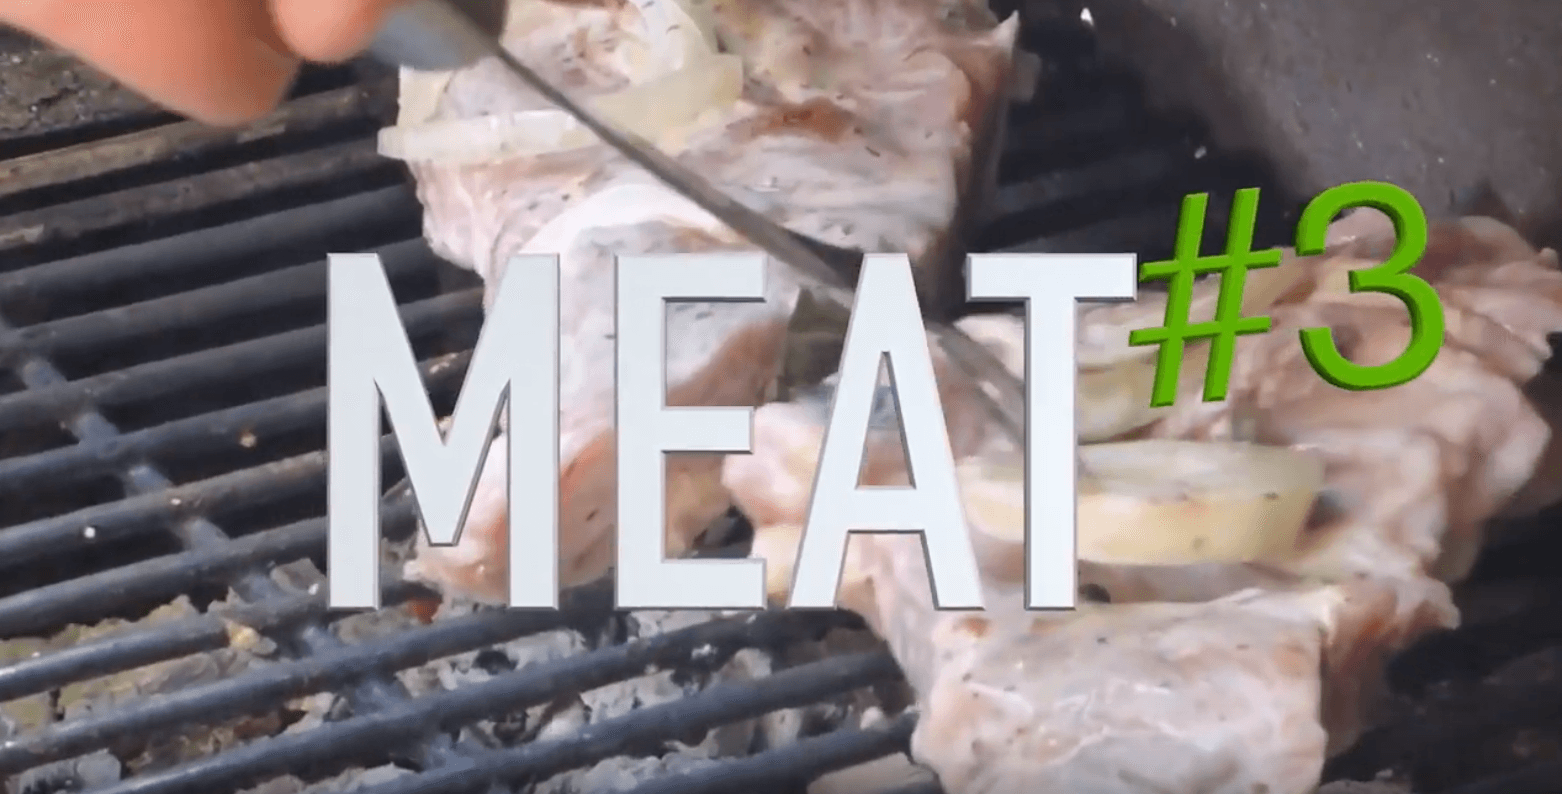 Easy Vegan Hack 15 for Veganuary - Meat Substitute #3